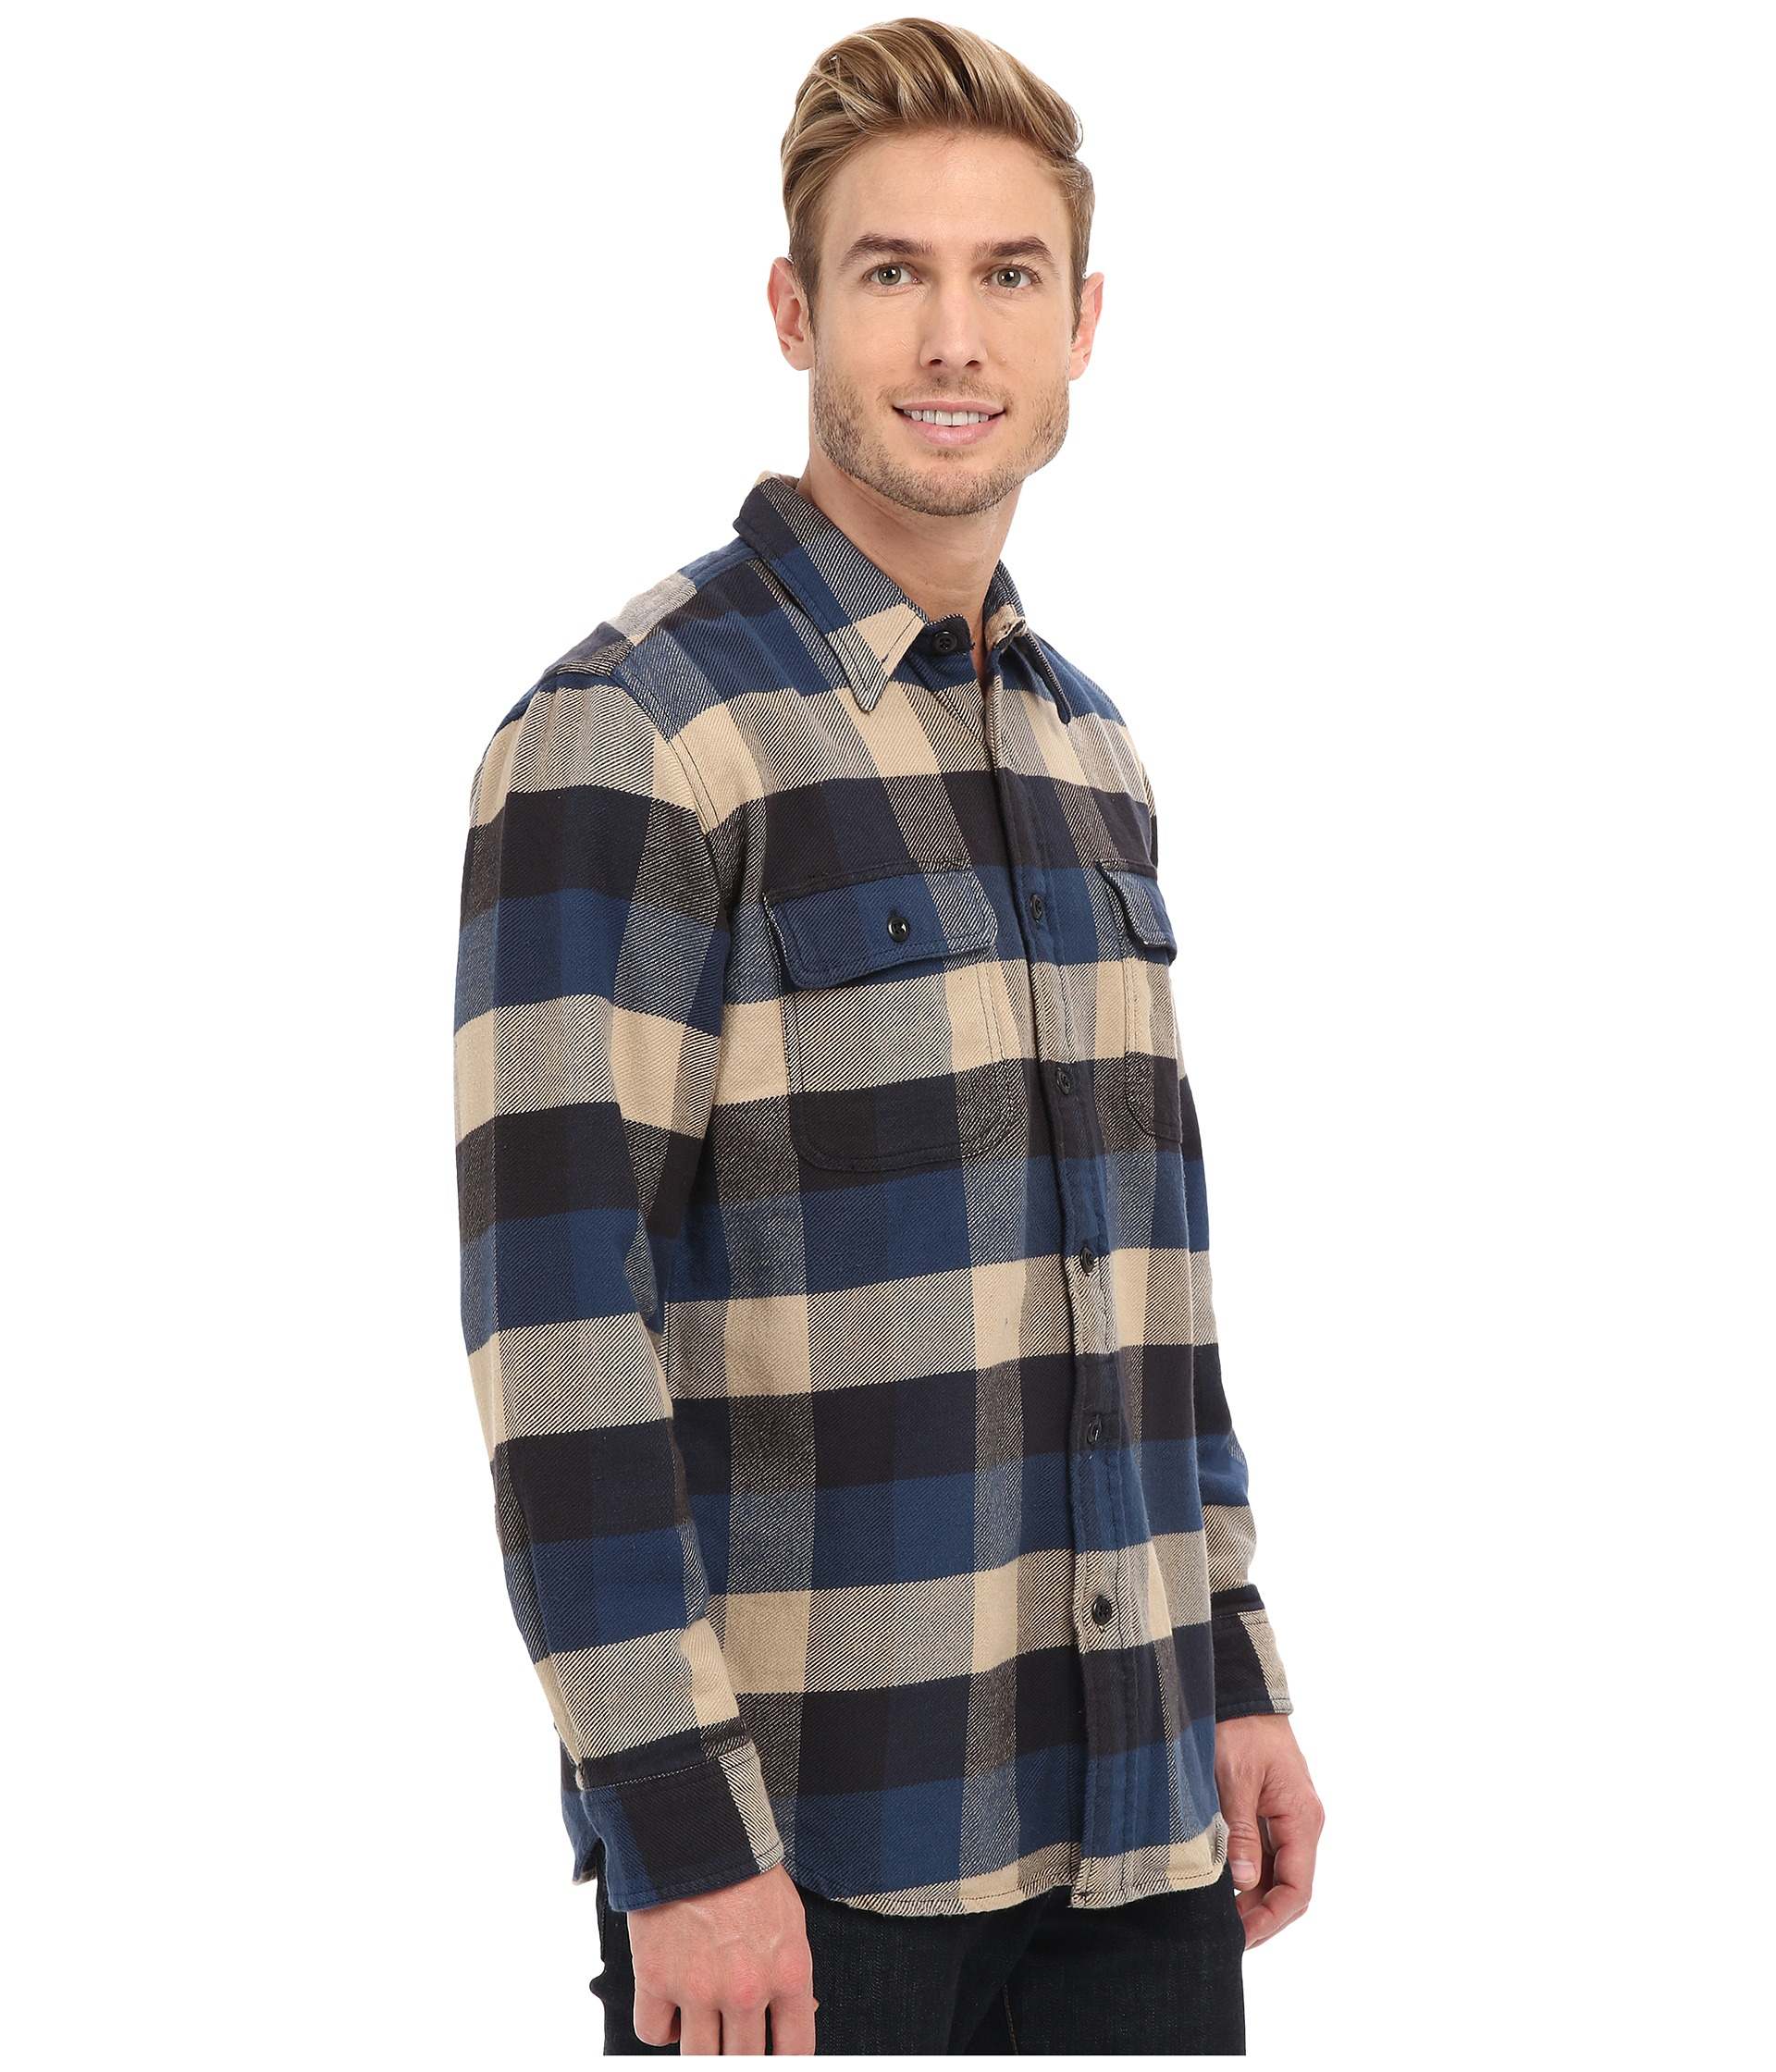 Lyst - Filson Vintage Flannel Work Shirt in Blue for Men